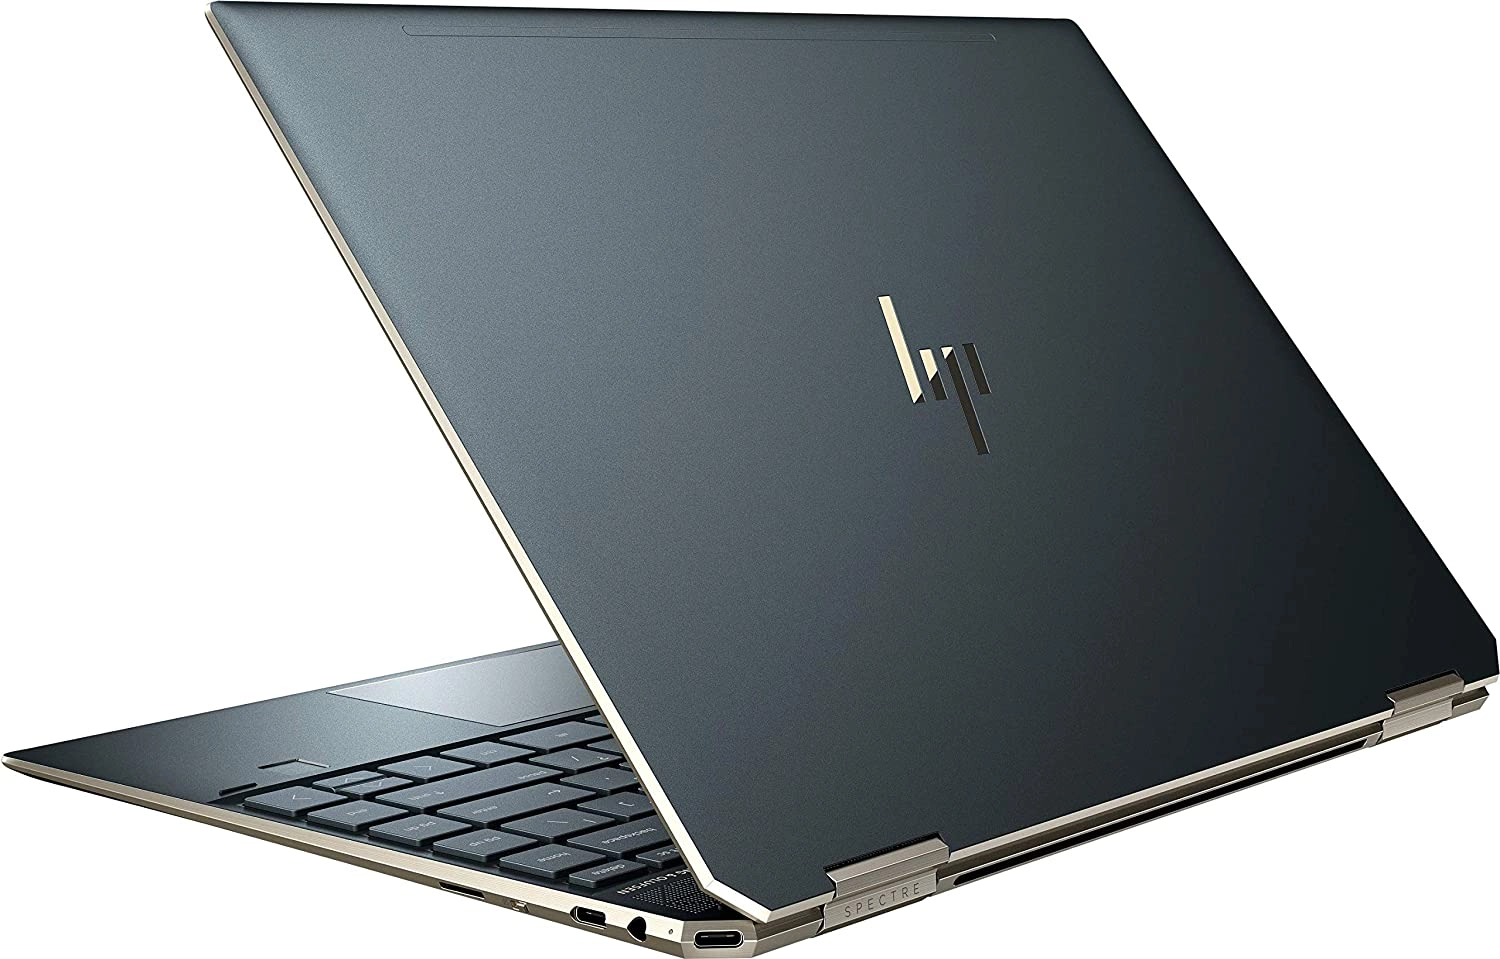 HP Spectre x360 - 13-aw0000ns laptop image